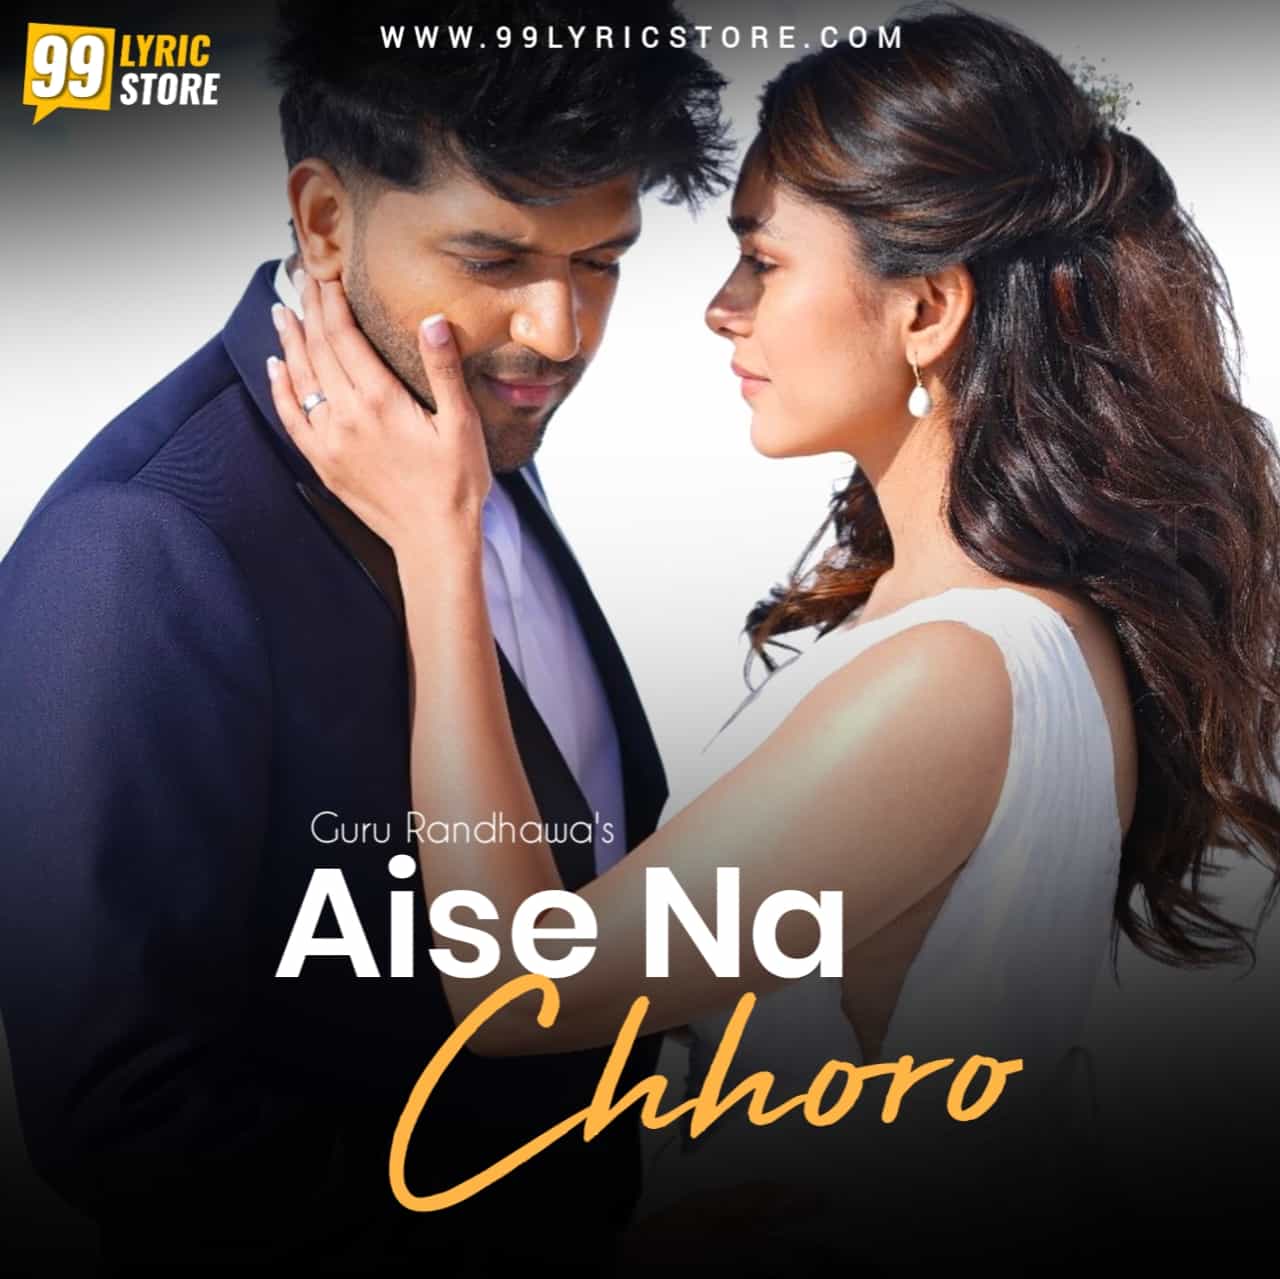 Aise Na Chhoro Song Image Features Guru Randhawa